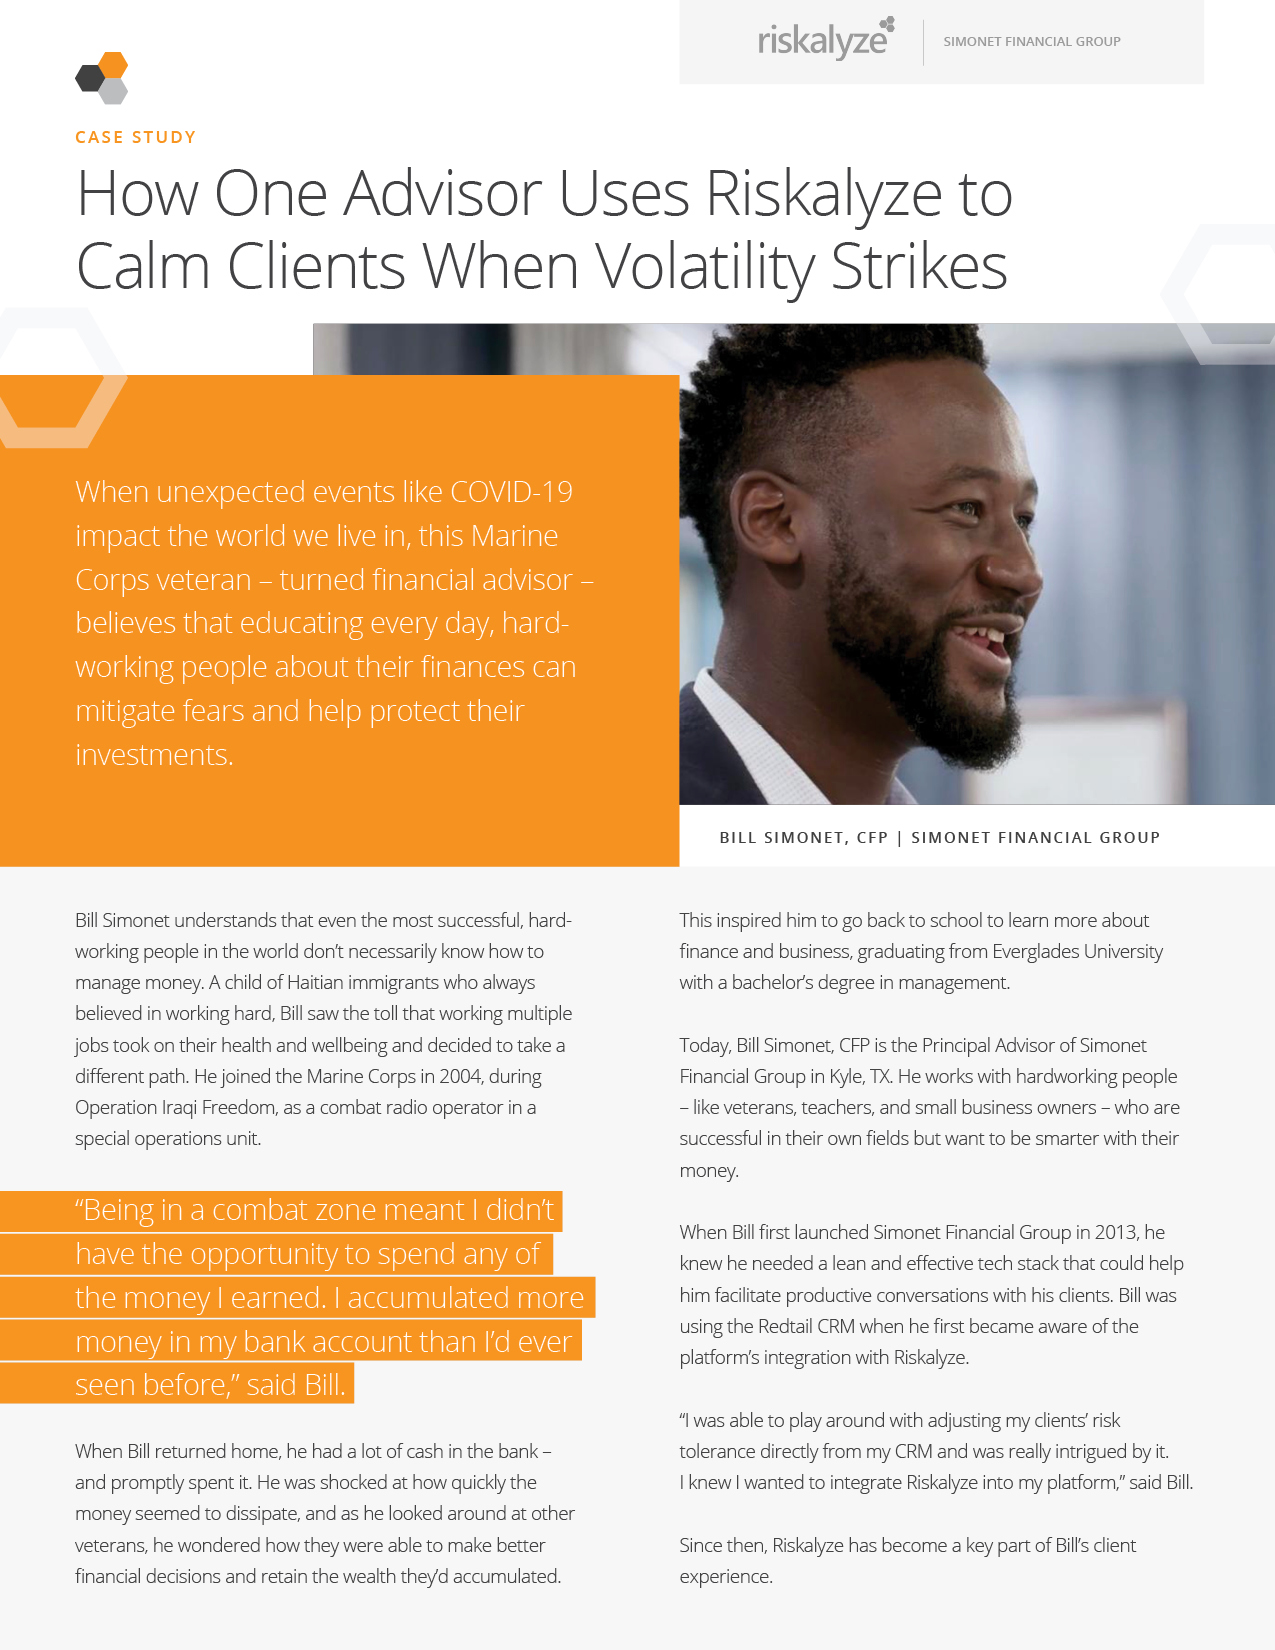 When Volatility Strikes _ Riskalyze Case Study_Page_1